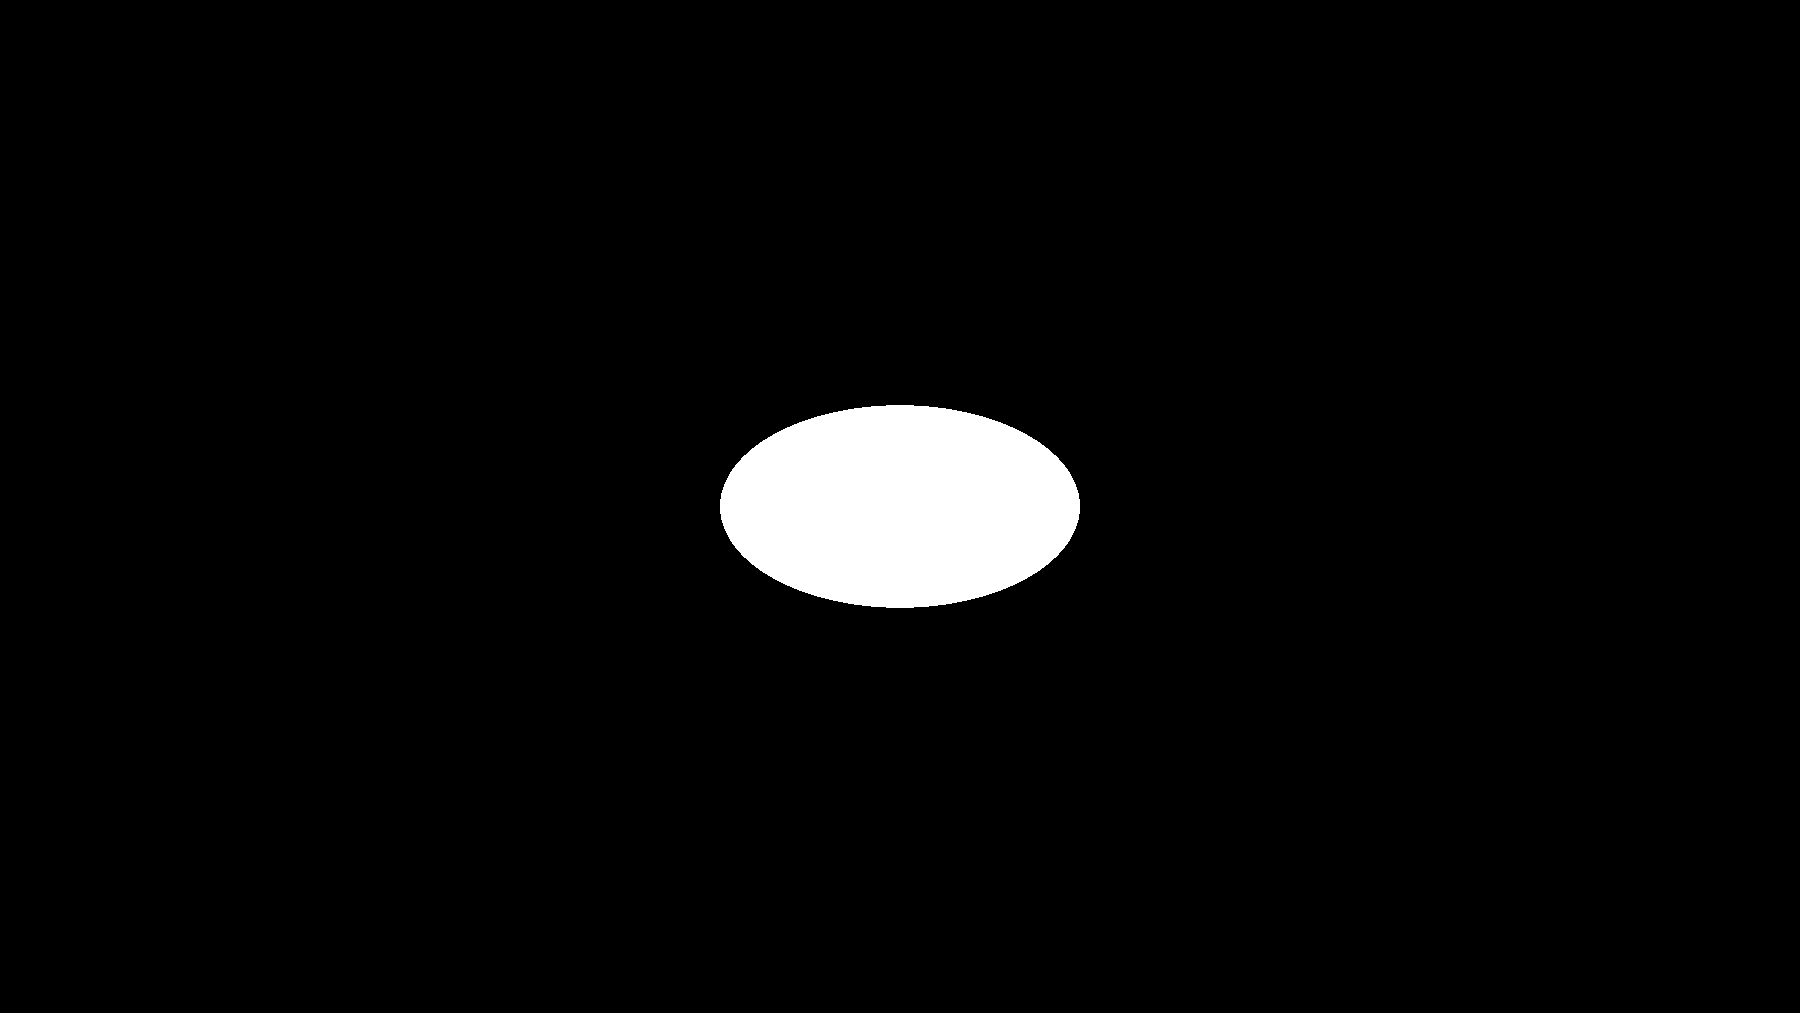 Inverted circle